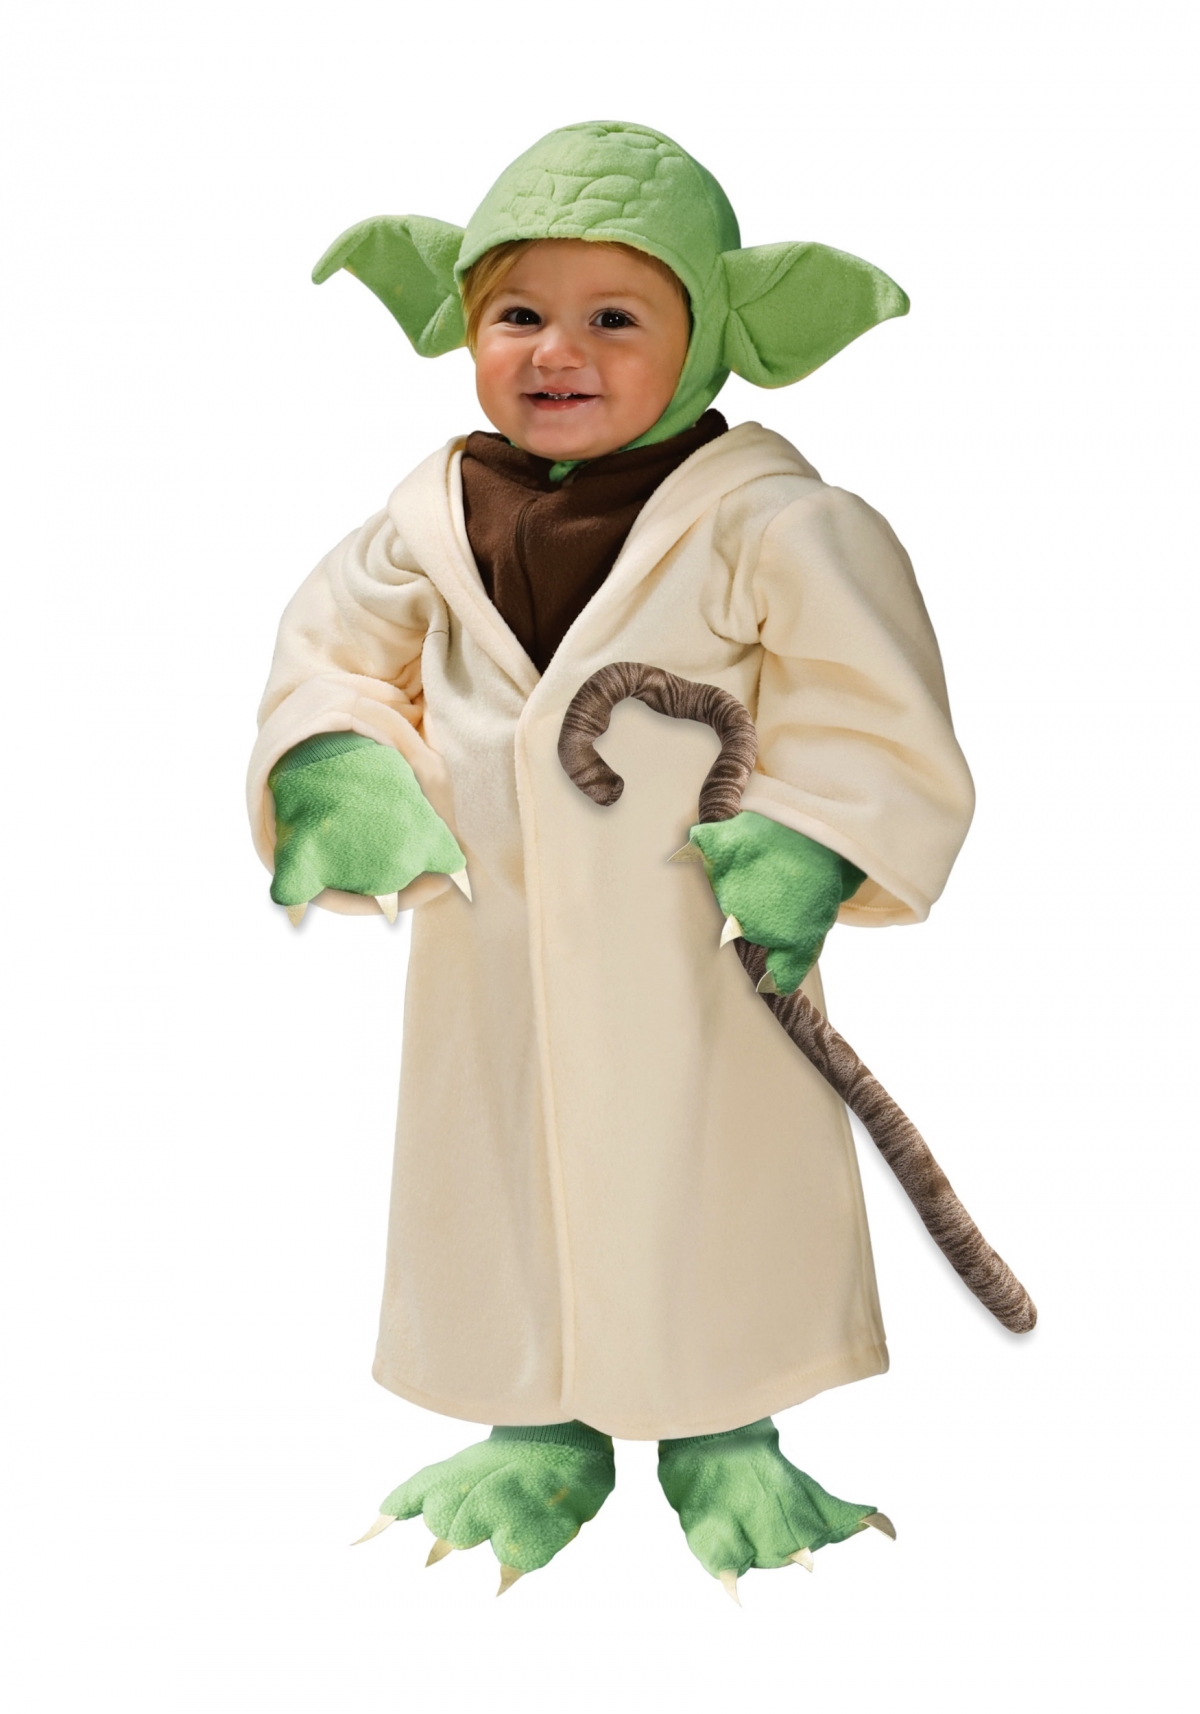 Halloween 2015 Cutest Costume Ideas For Children